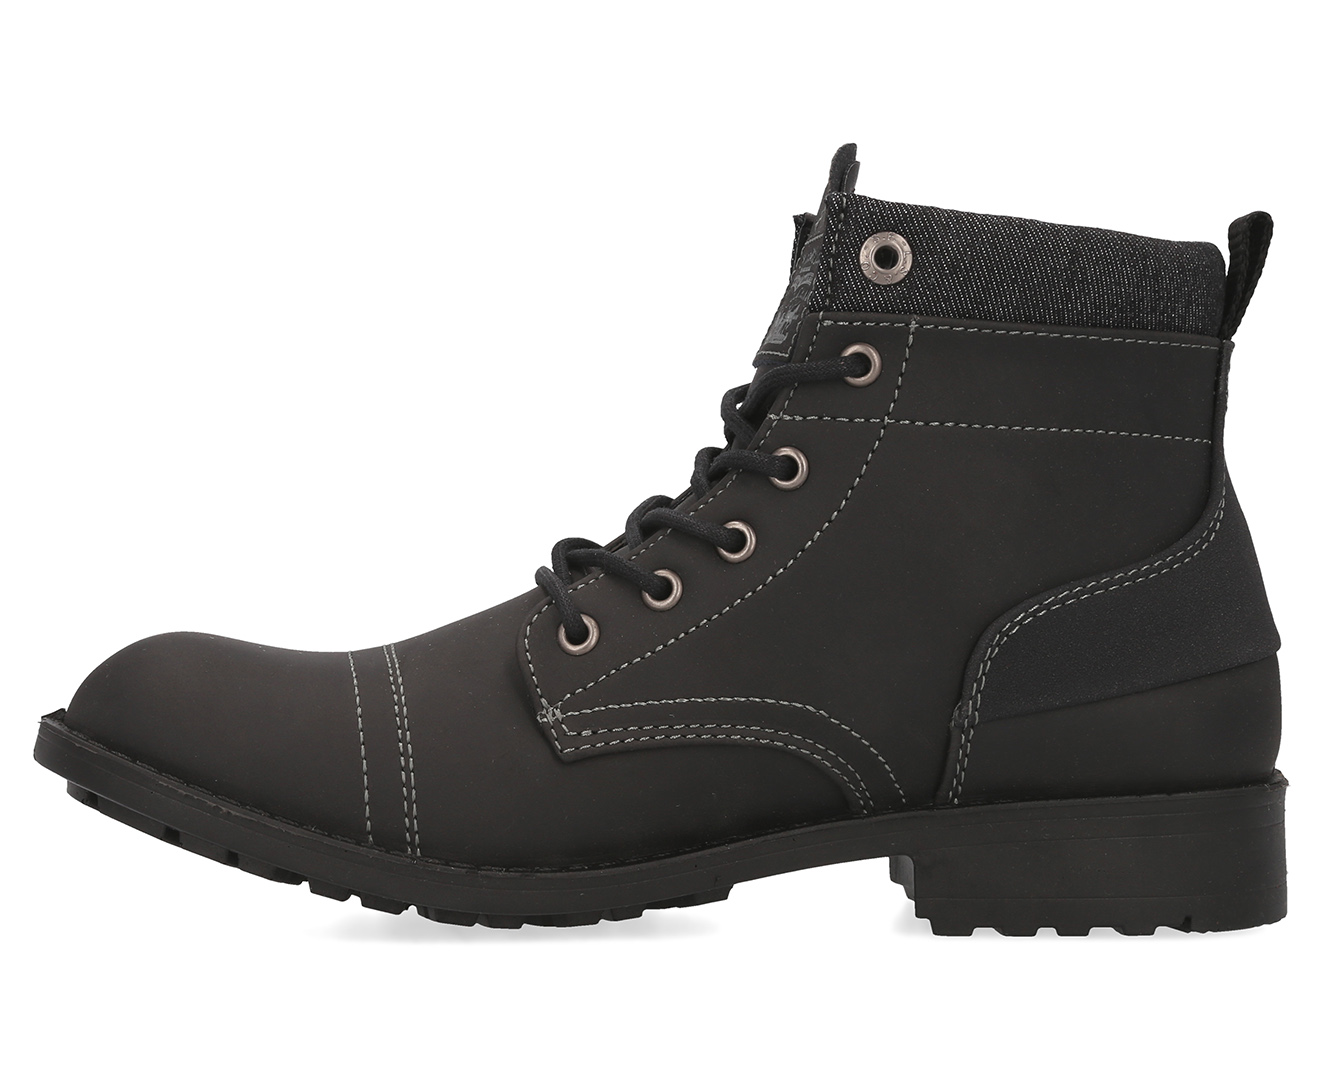 Levis Men's Artesia Boot - Black | Catch.co.nz